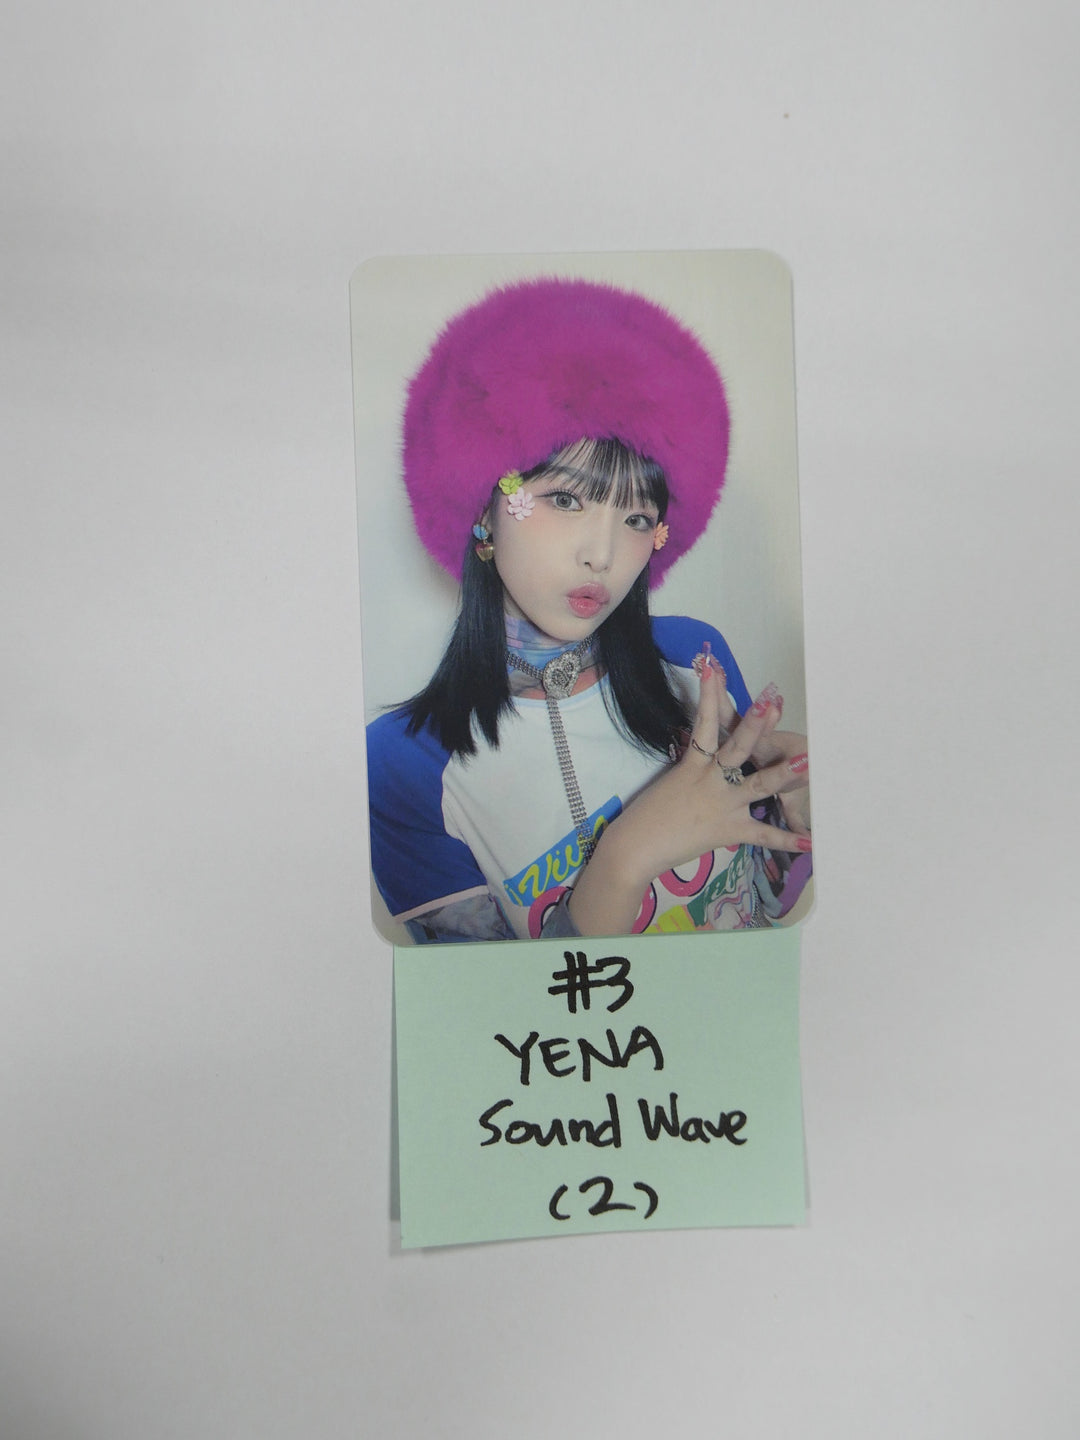 YENA "ˣ‿ˣ (SMiLEY)" - Soundwave Fansign Event Photocard